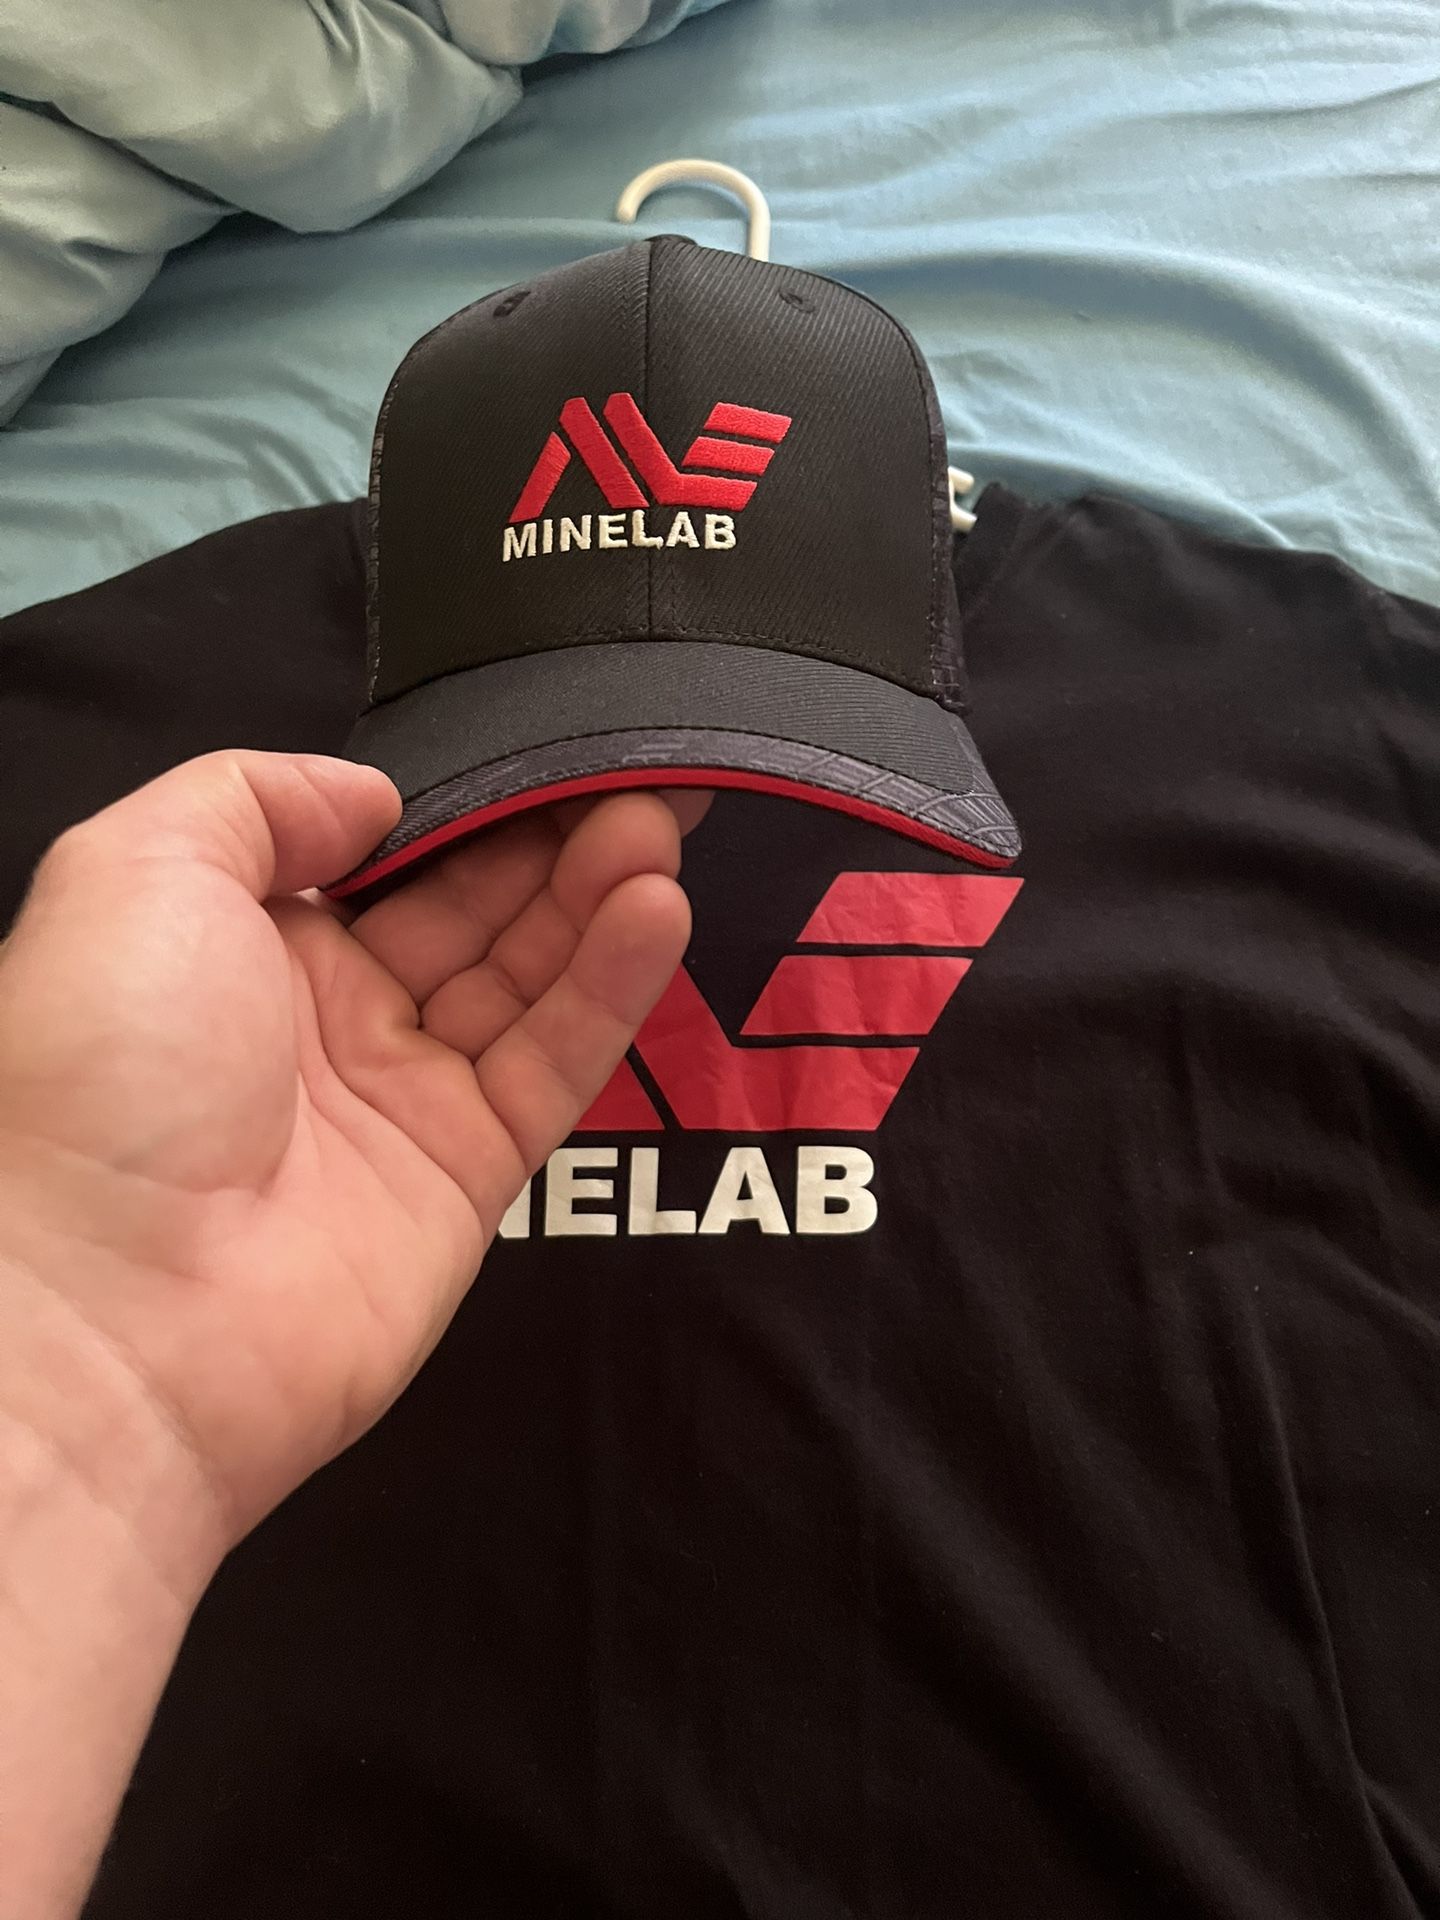 Minelab T-shirt And Minelab Hat